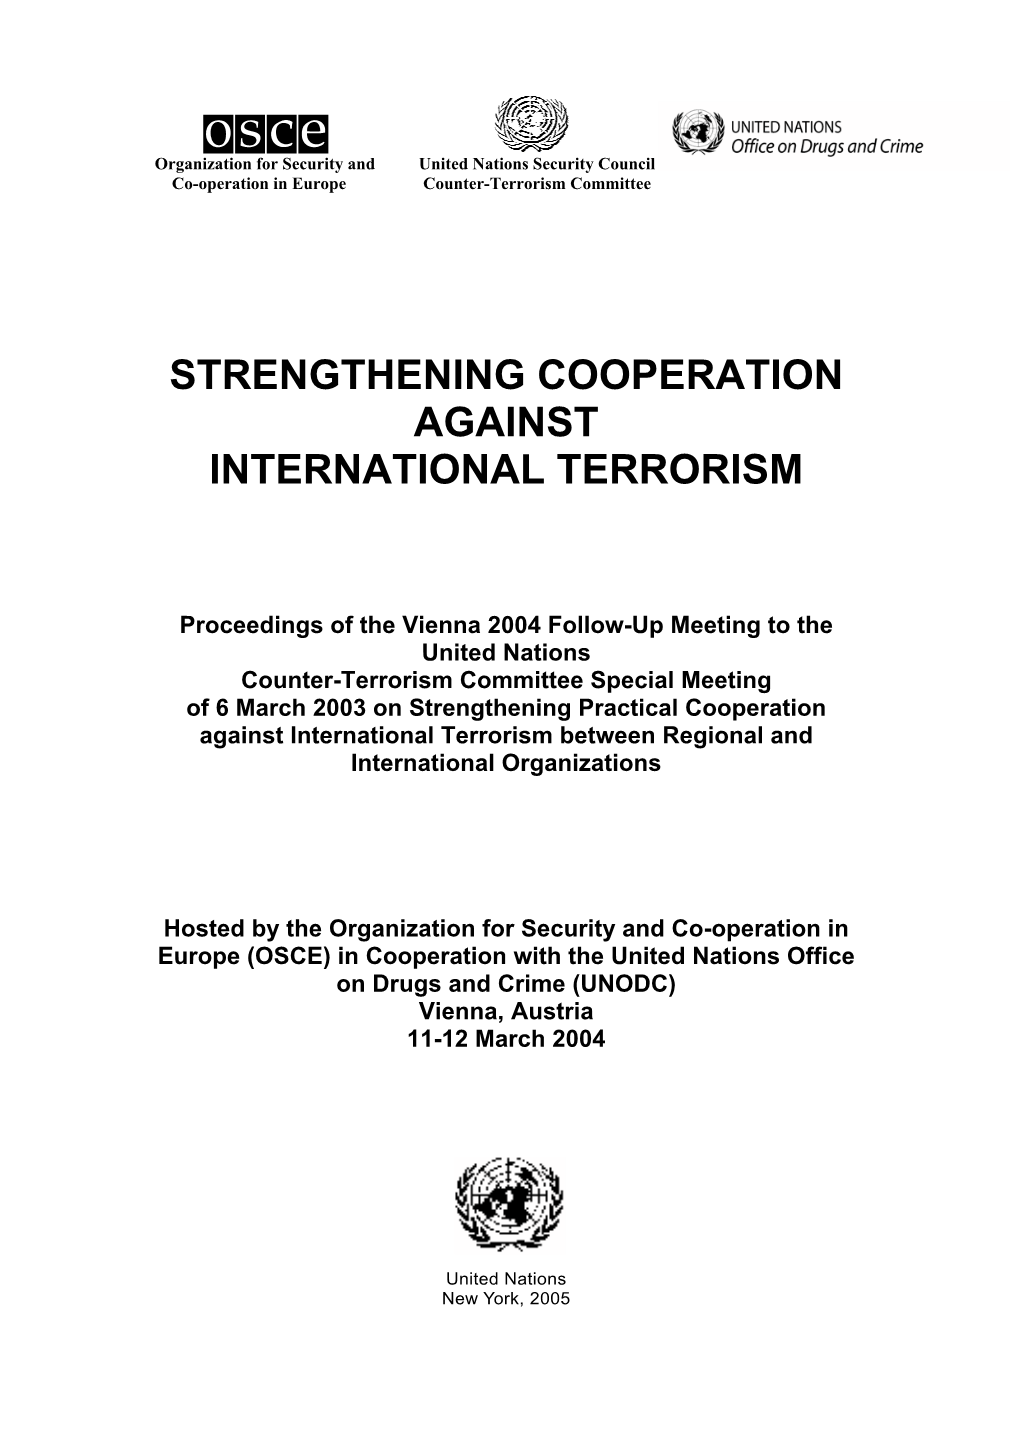 Strengthening Cooperation Against International Terrorism